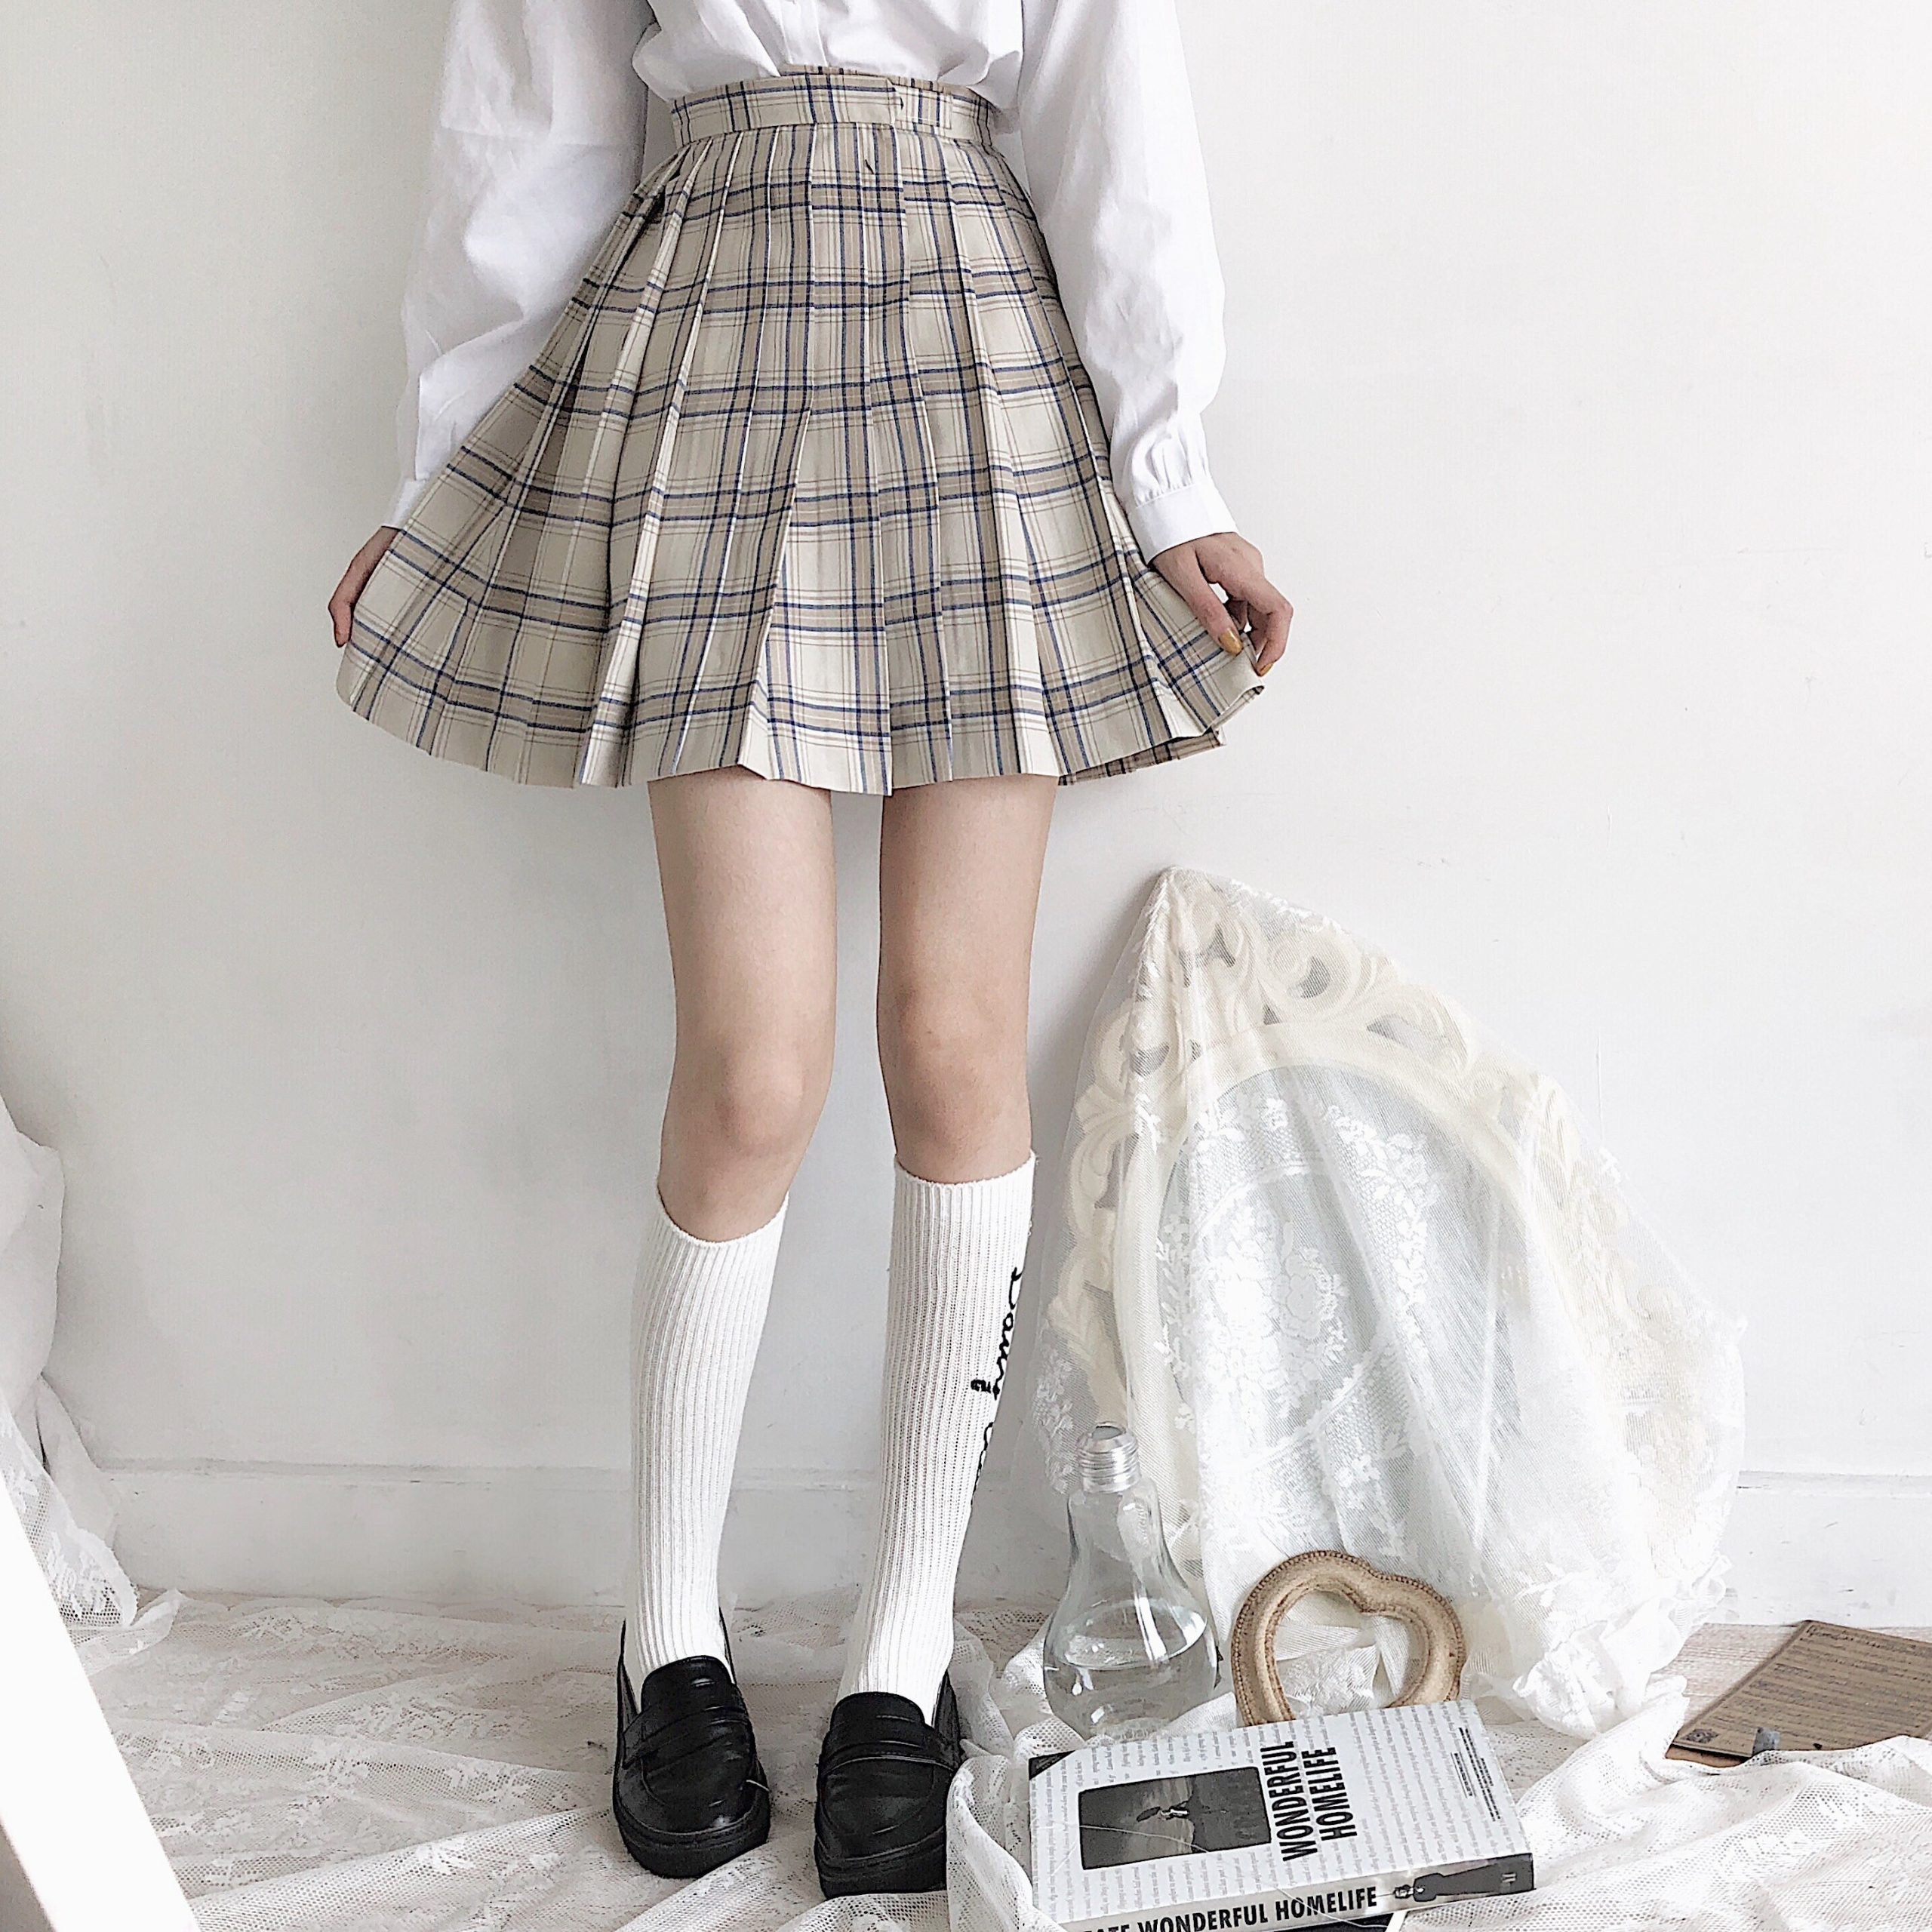 Dark Academia Clothing Harajuku Plaid Mini Skirts For Casual Lady Lolita Fashion High Waist Ruffles Skirts For Your Minimal Style